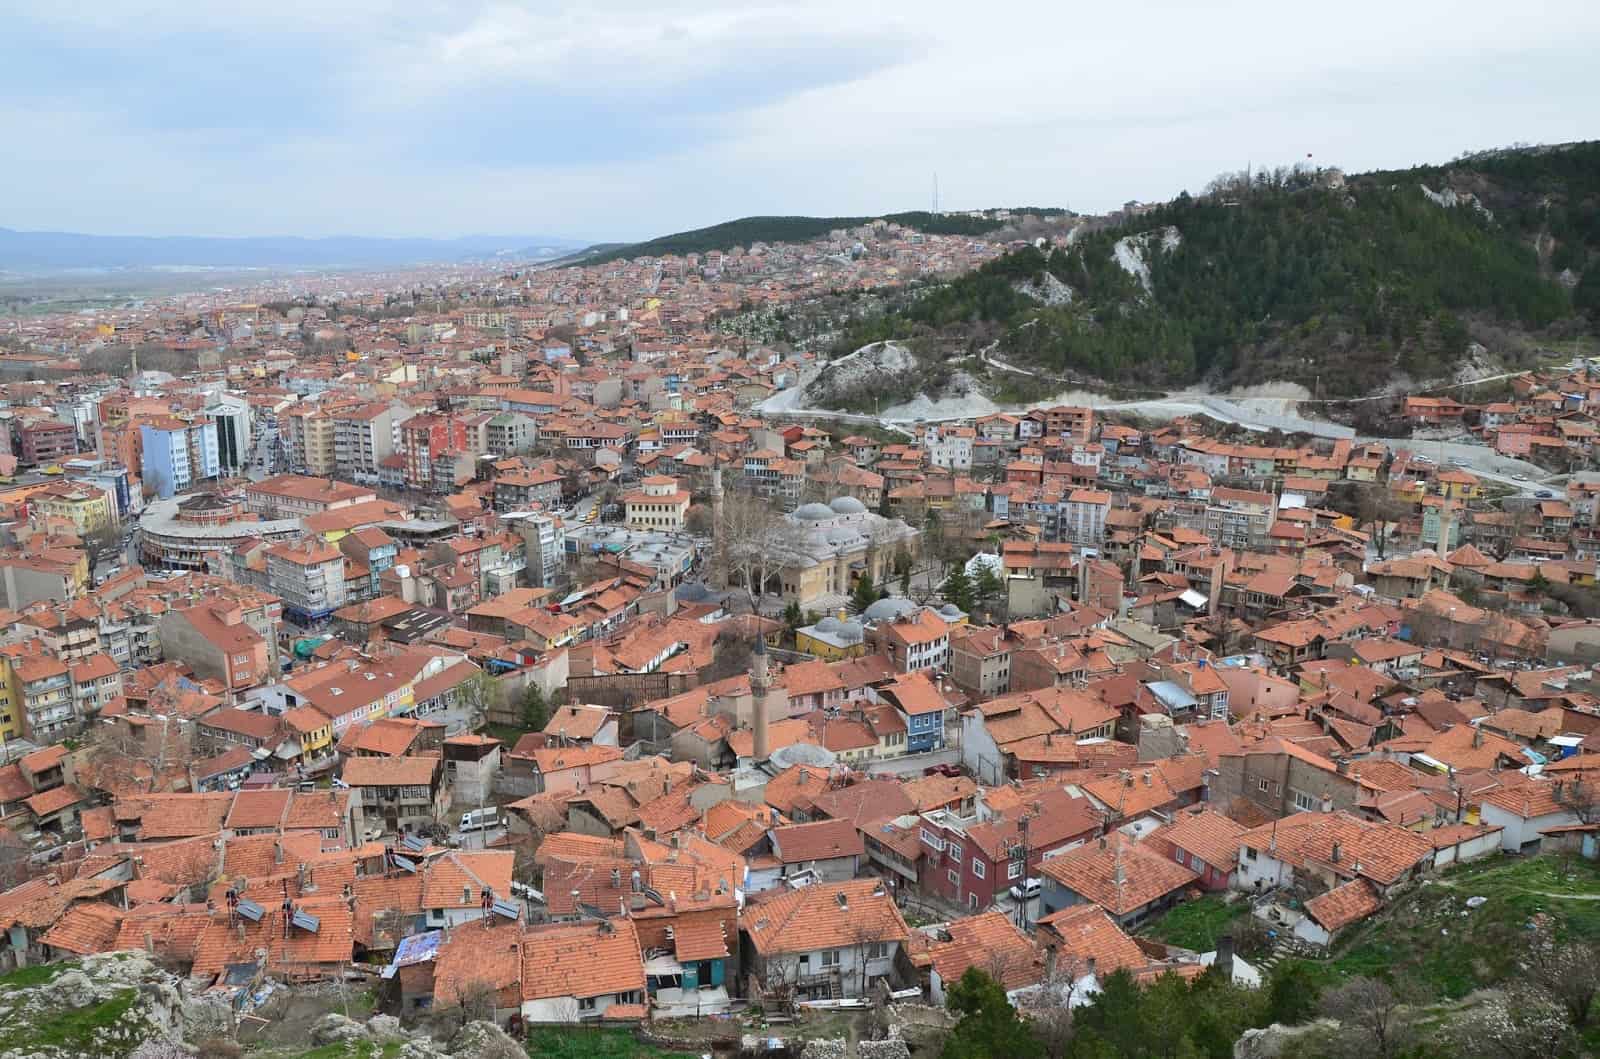 The view from Kütahya Kalesi in Kütahya, Turkey